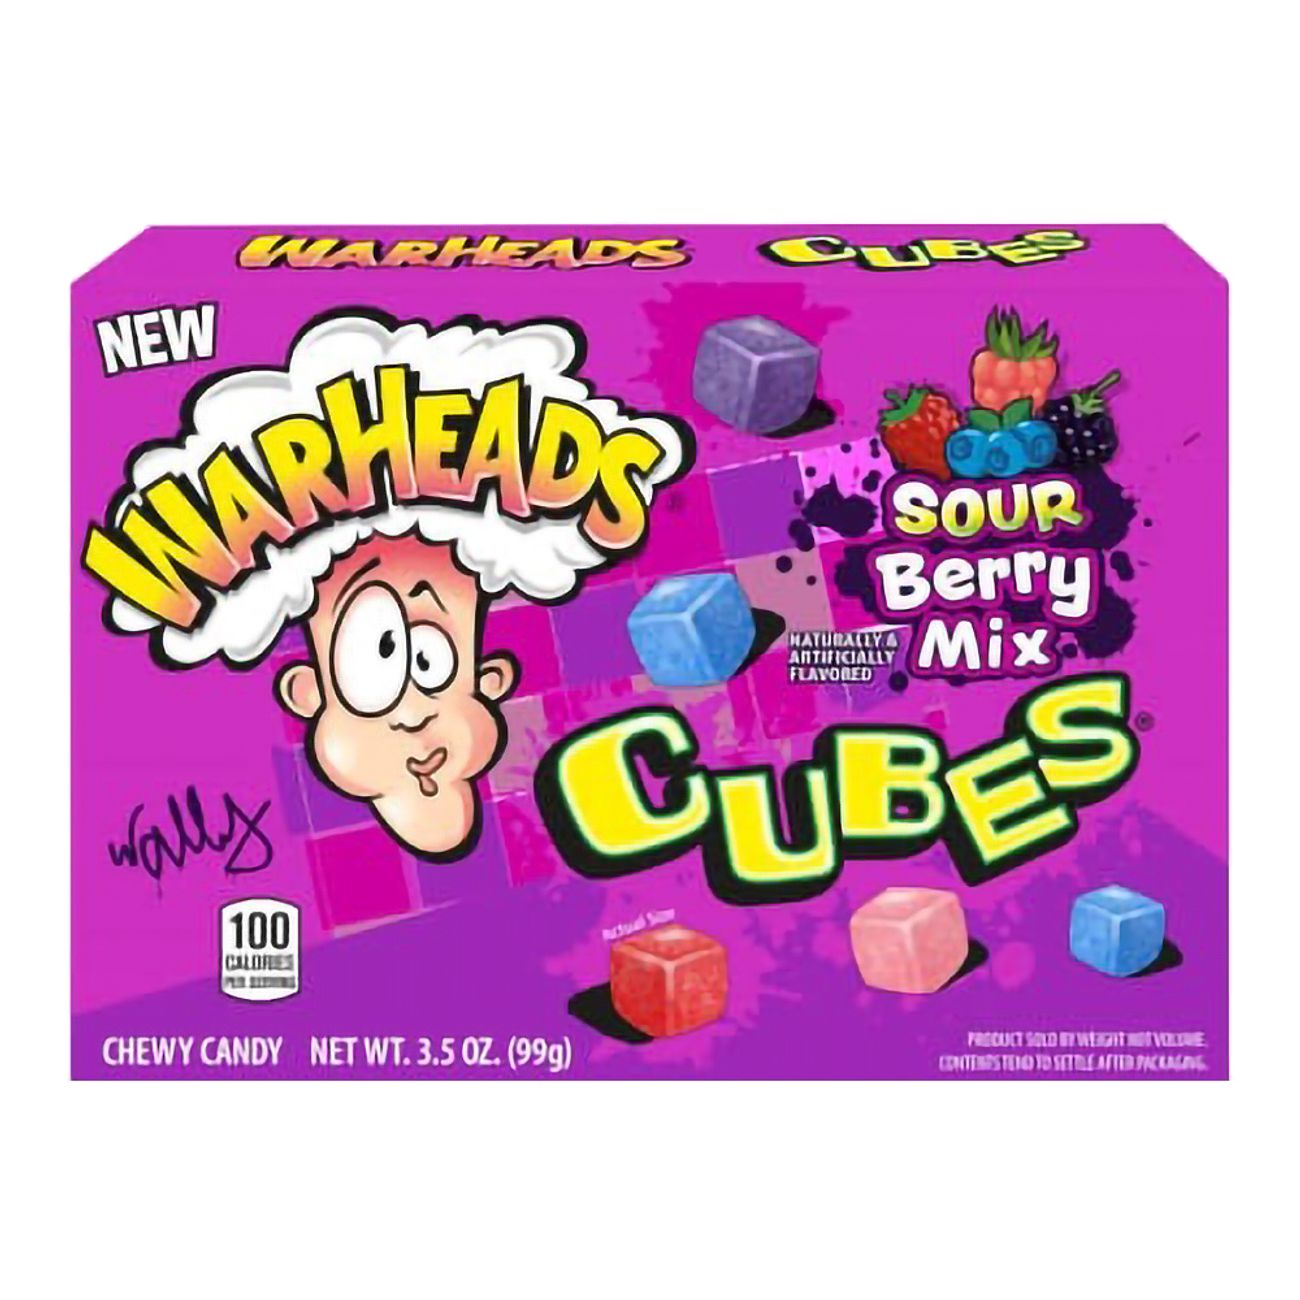 warheads-sour-berry-mix-cubes-103164-1